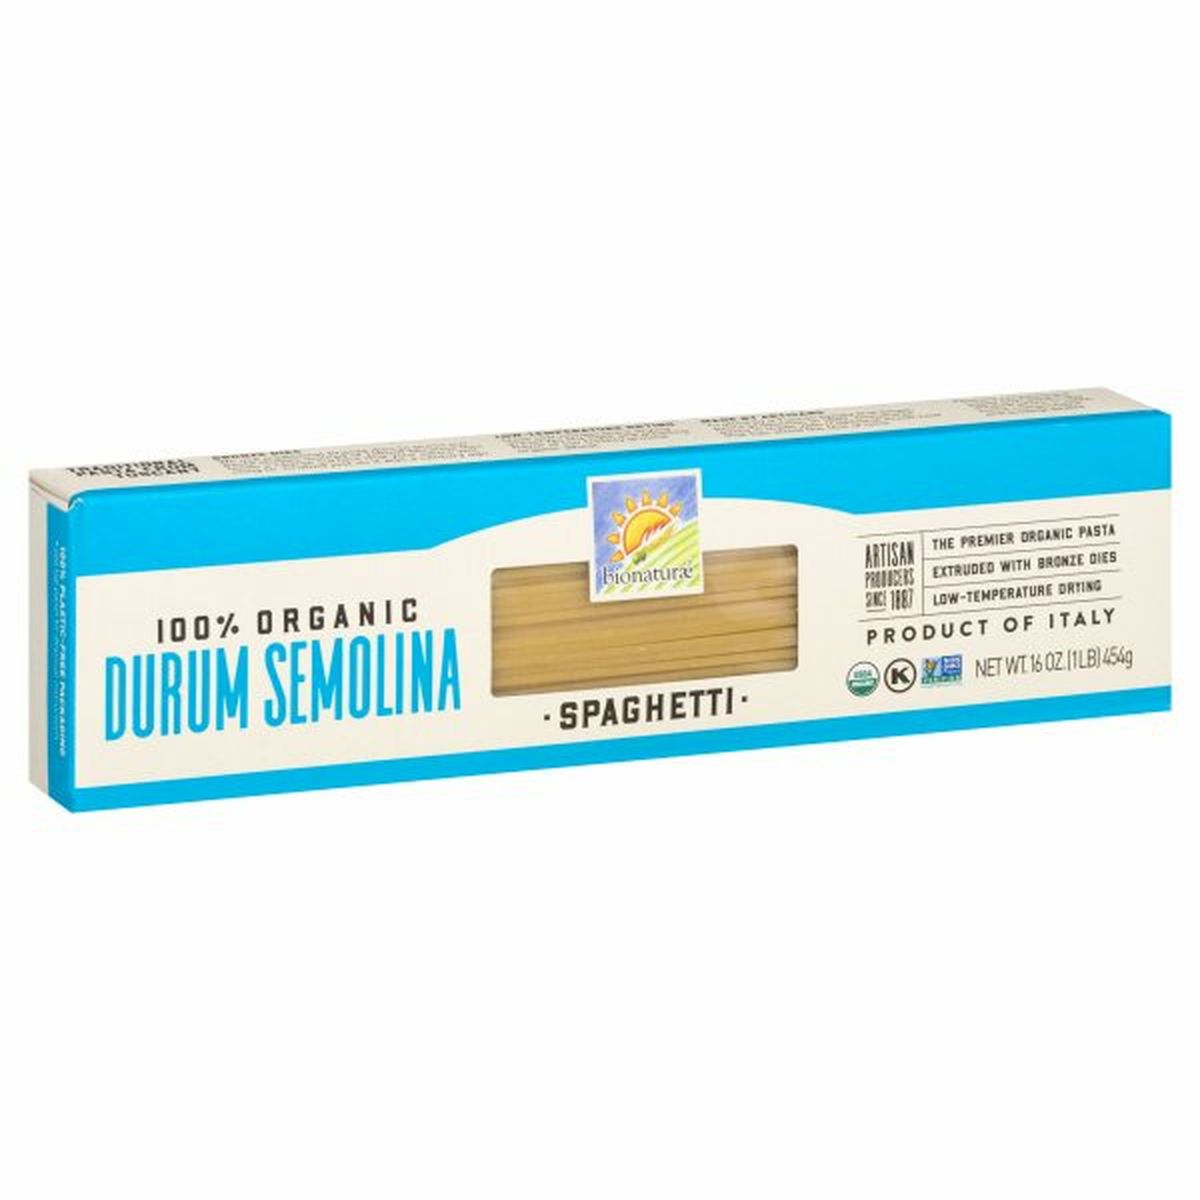 Calories in bionaturae Spaghetti, 100% Organic, Durum Semolina